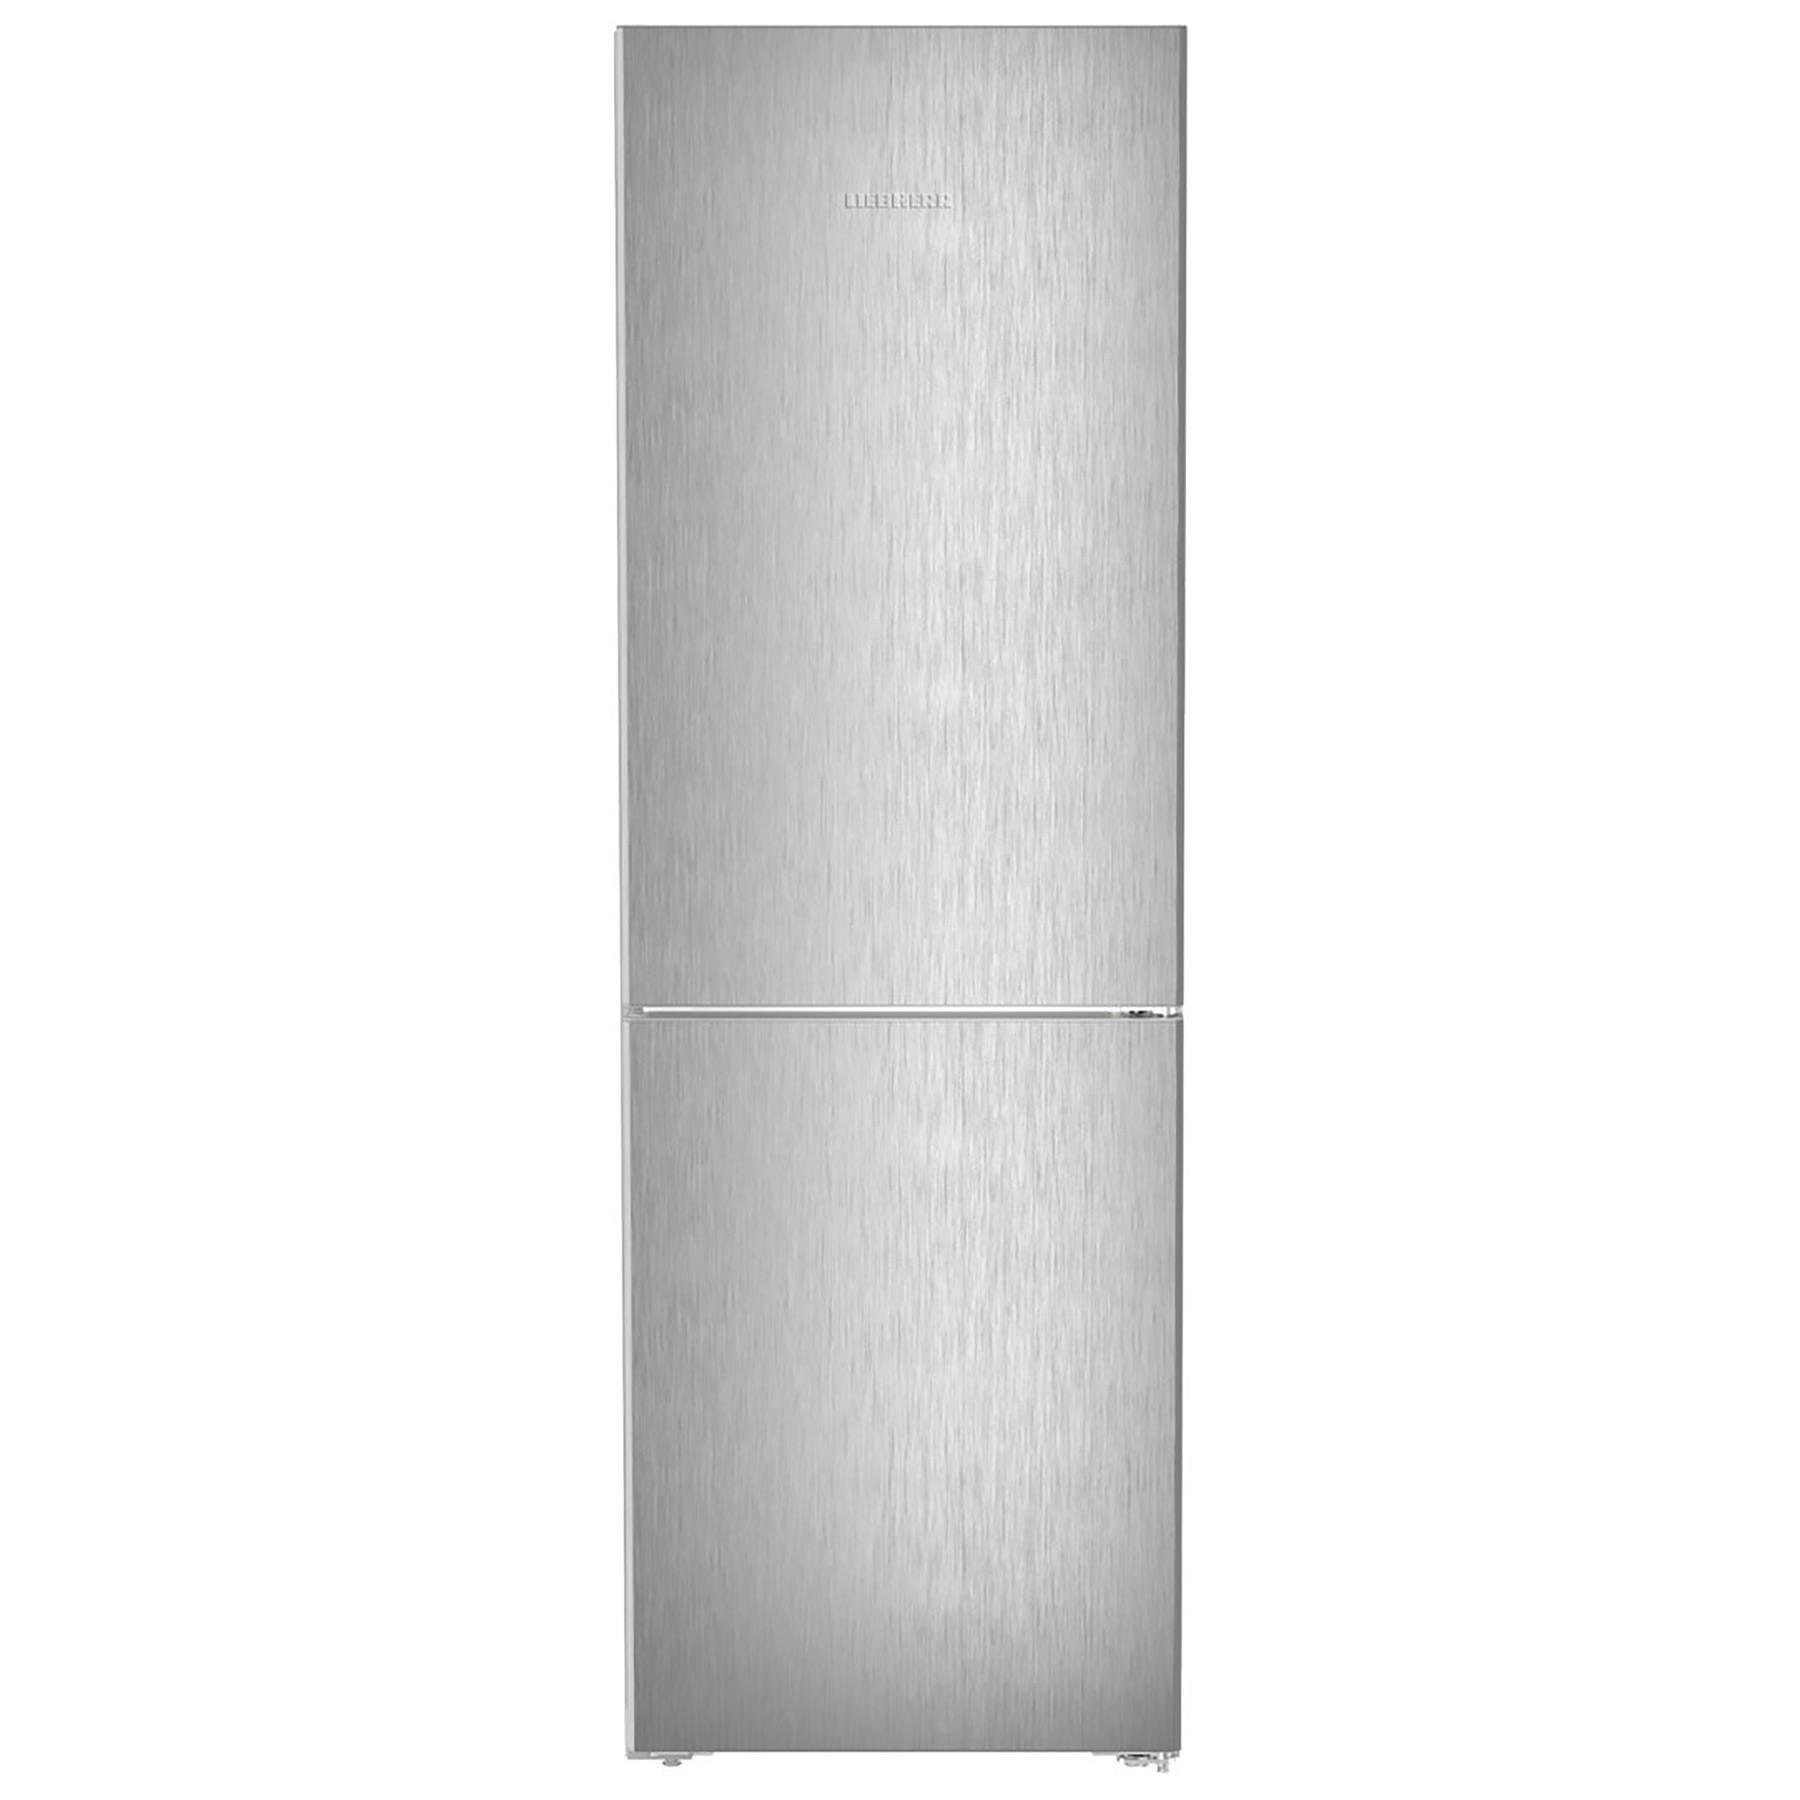 Liebherr CNSFD5203 60cm NoFrost Fridge Freezer in Silver 1 85m D Rated